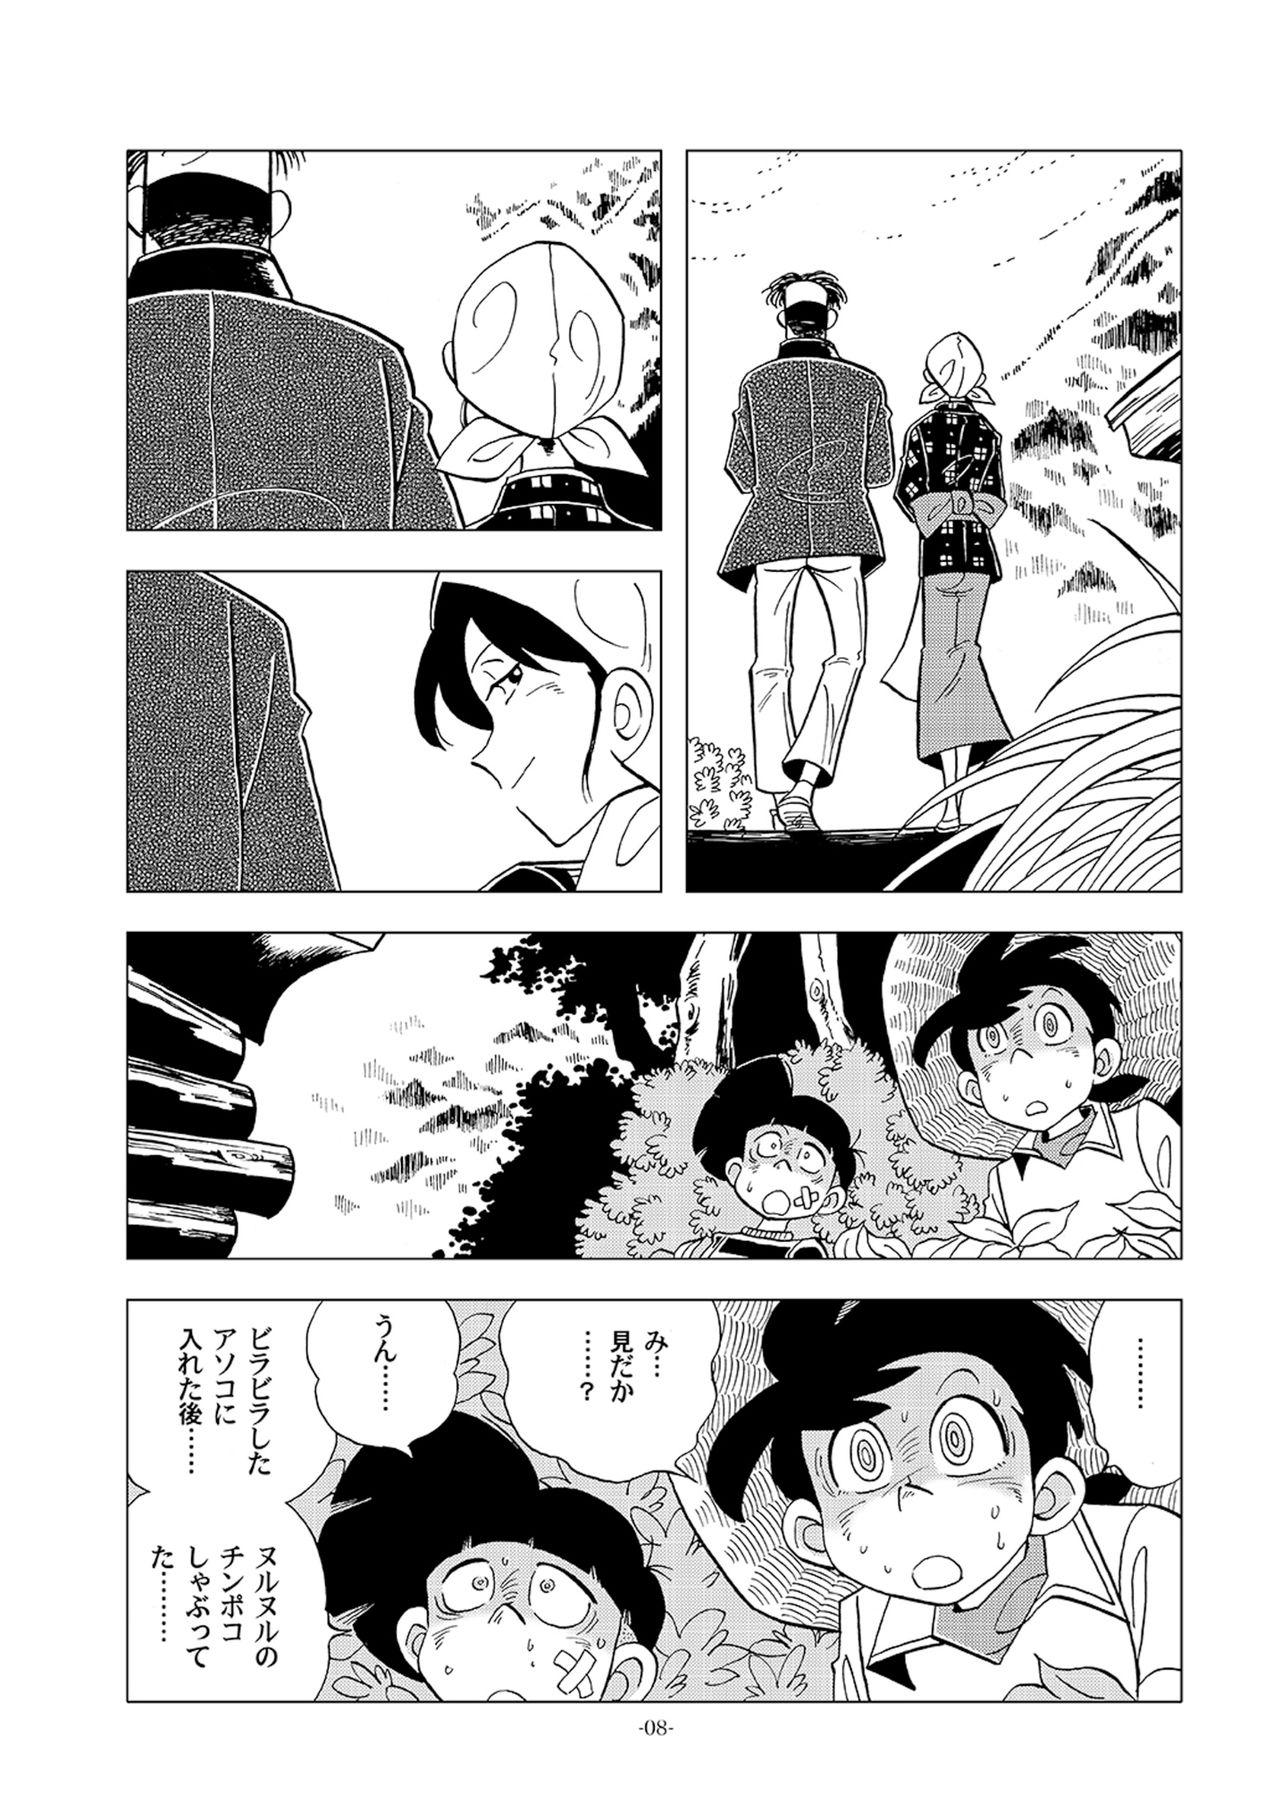 Exotic Dosu ke be nōson sai roku SP - Tsurikichi sanpei Pool - Page 8